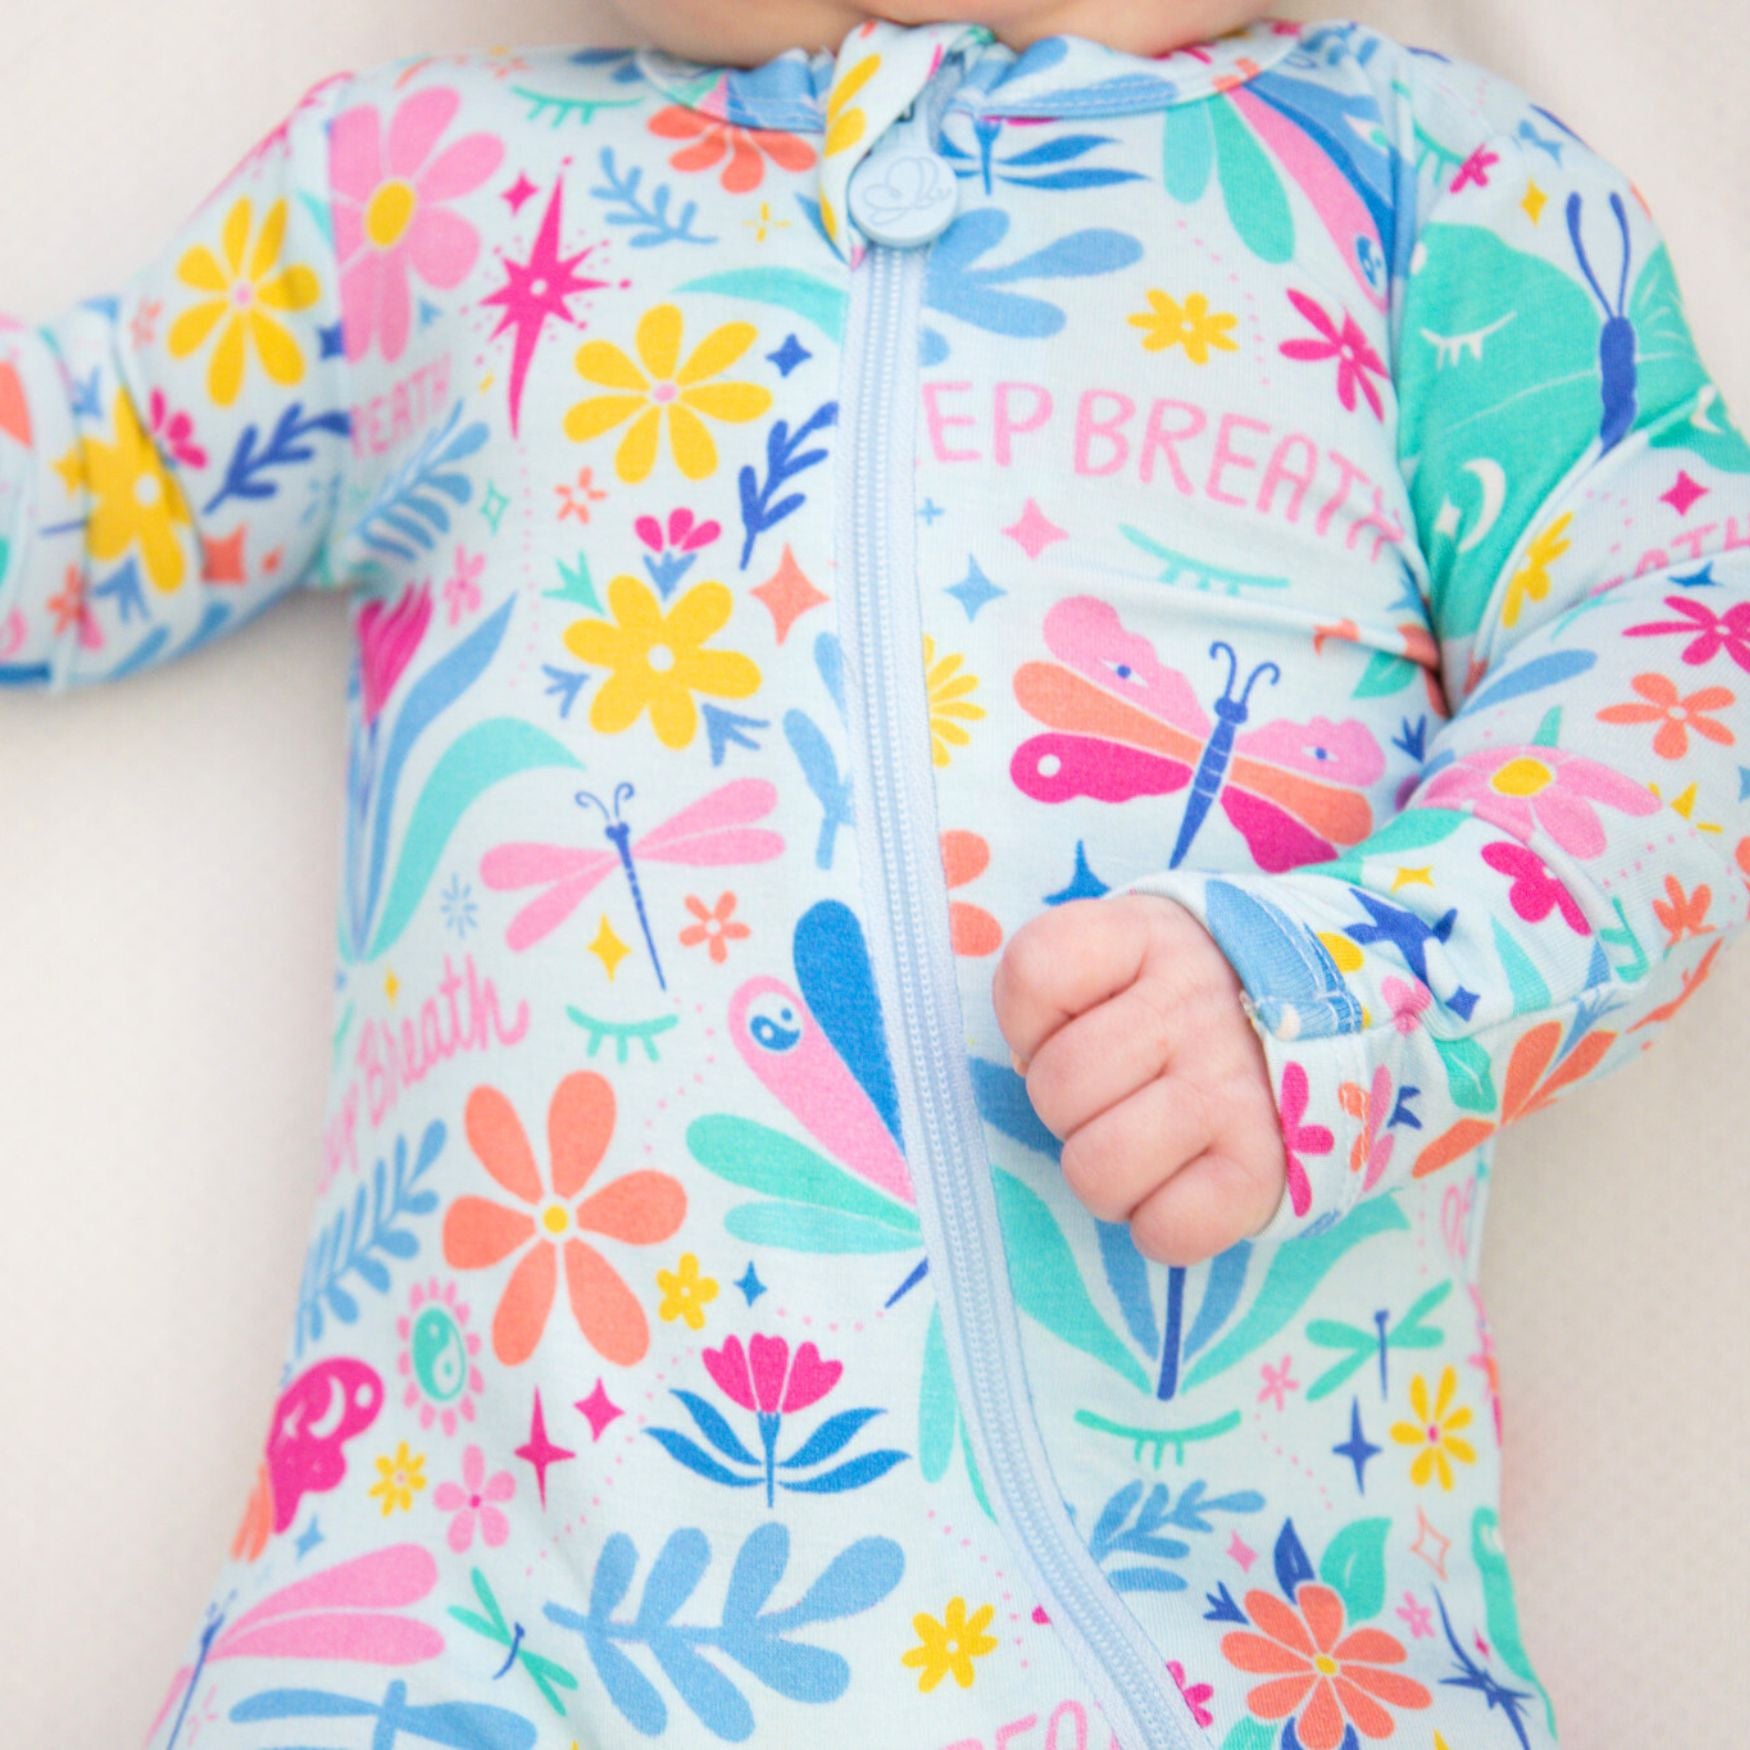 Footless Bamboo Toddler Zipper Pajamas, Flowers & Butterflies, Bamboo Zipper Pajamas, Double-Zipper Onesies for Toddler Girl, 4-Way Stretch - "Deep Breath" - Raising Mama